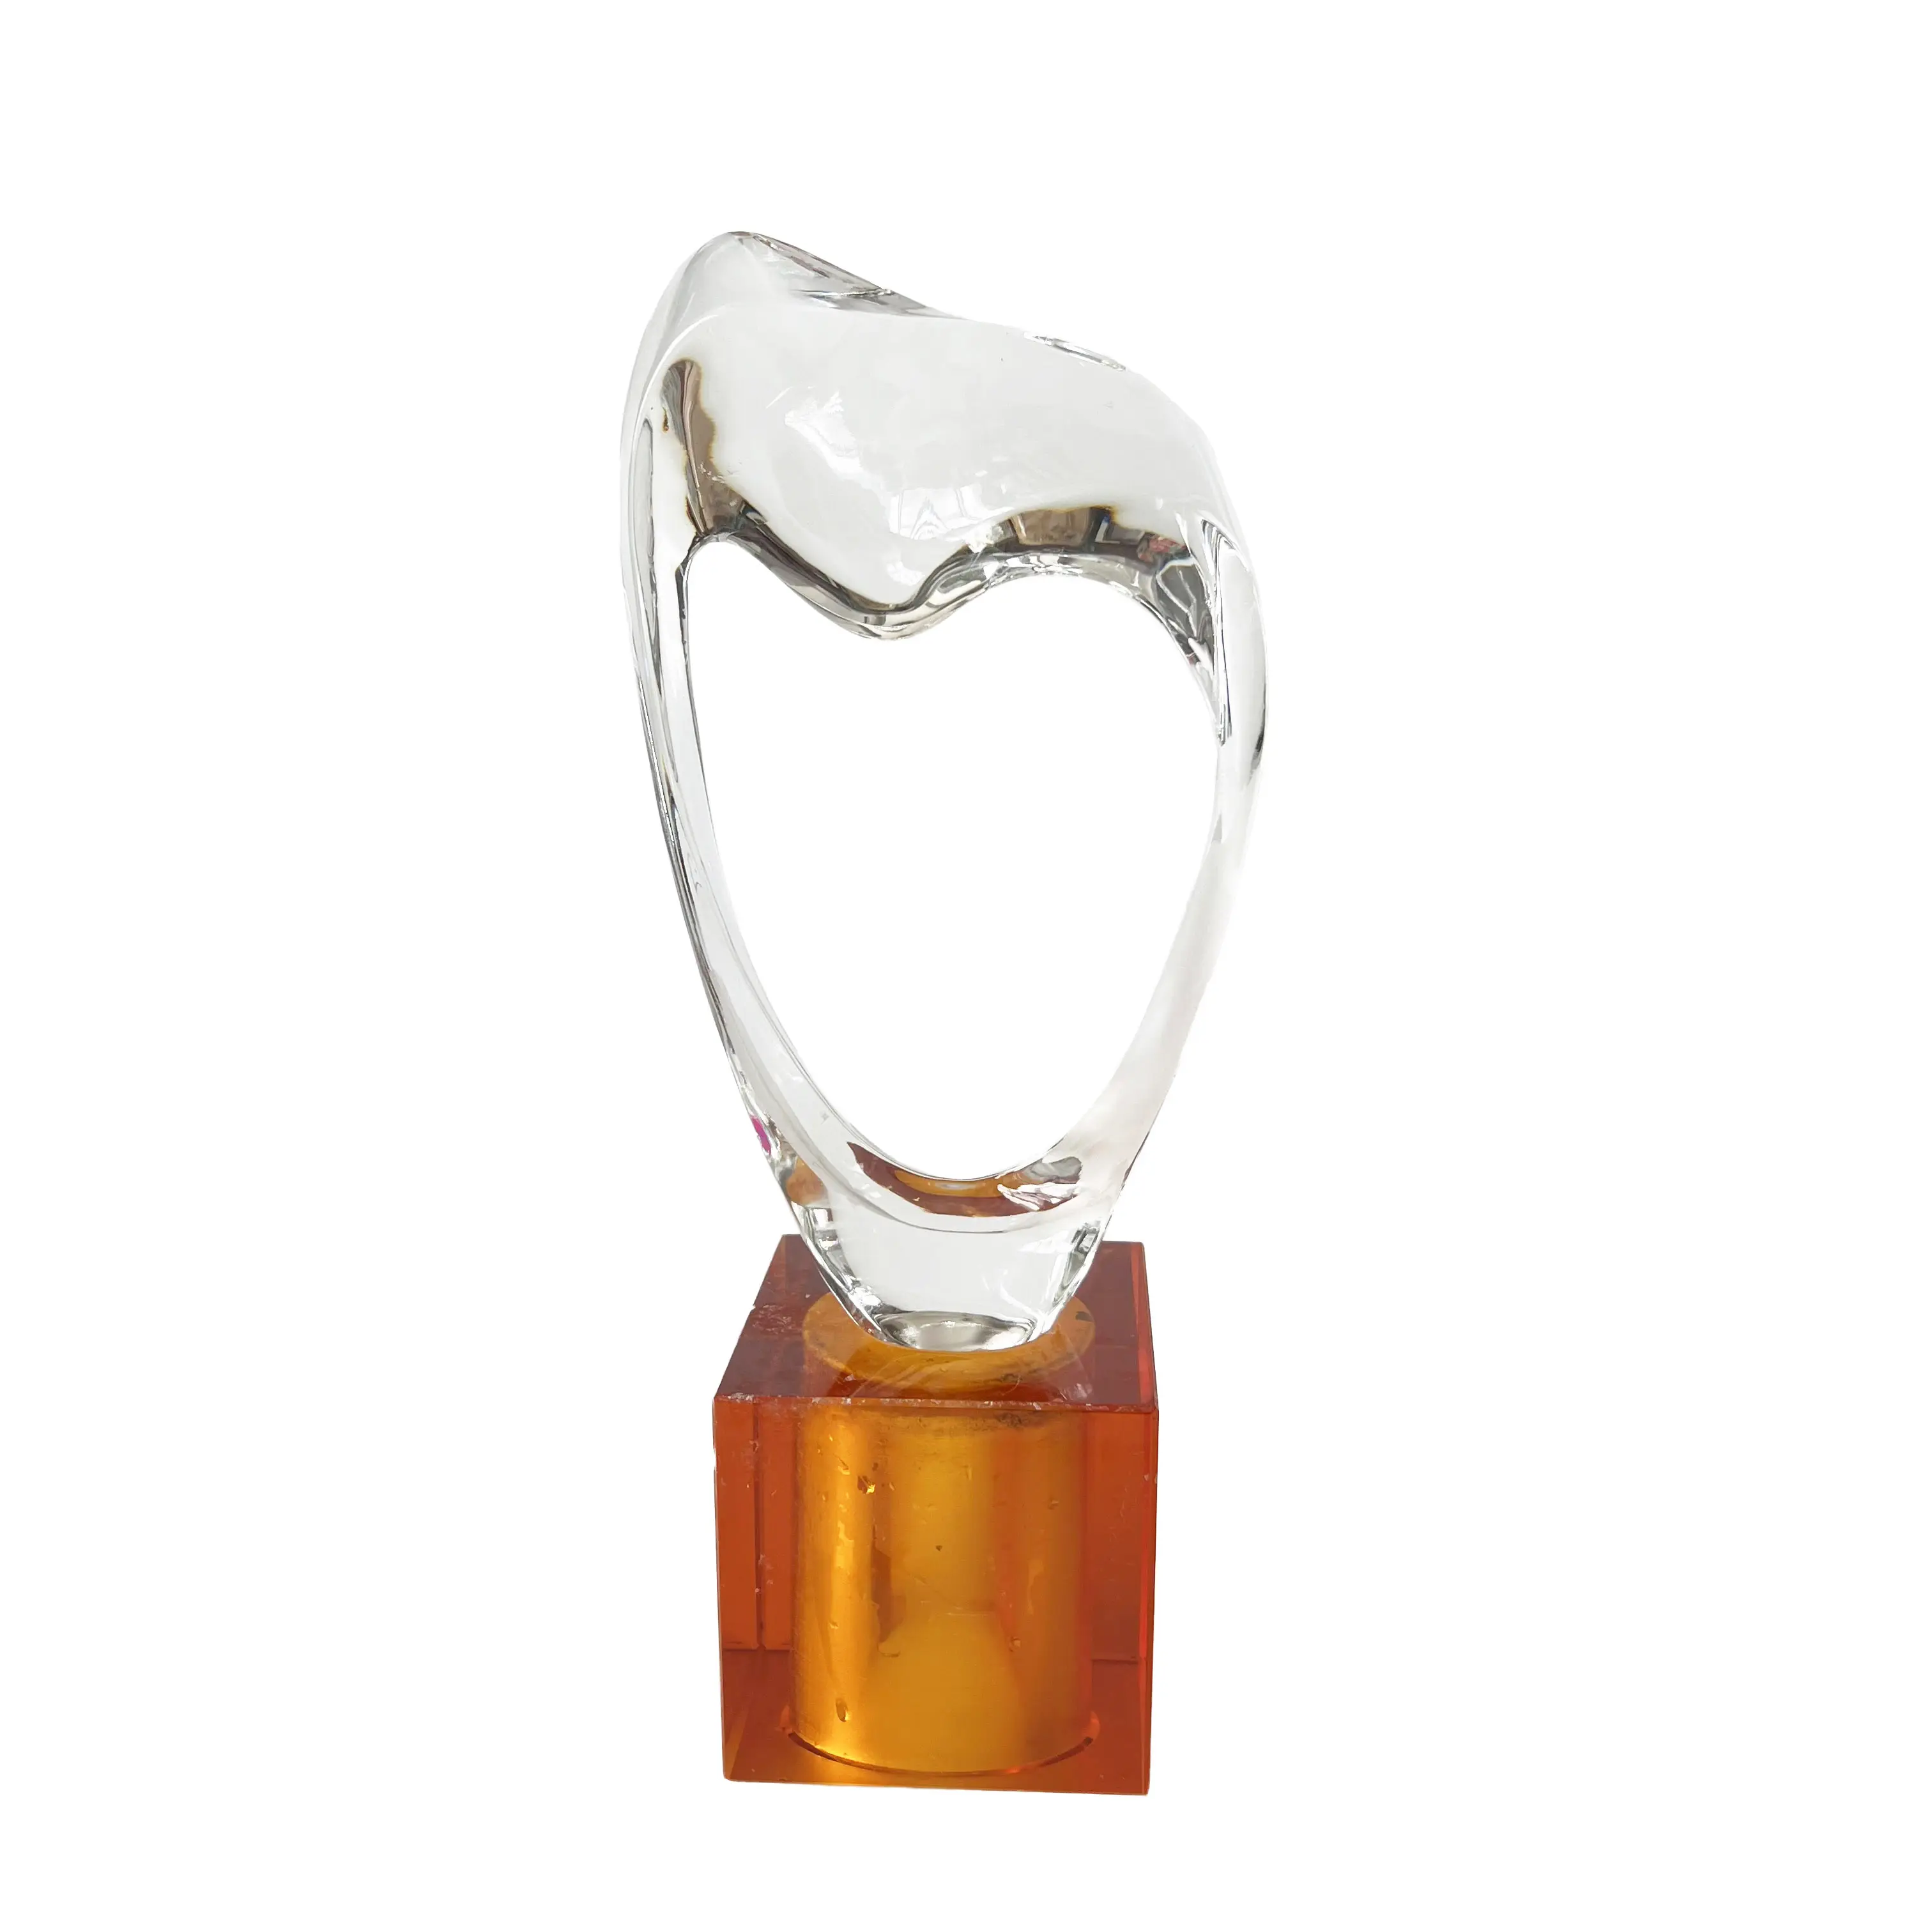 Hitop diseño cristal transparente con base de cristal ámbar diseño redondo K9 premio de trofeo de cristal para regalo artesanal